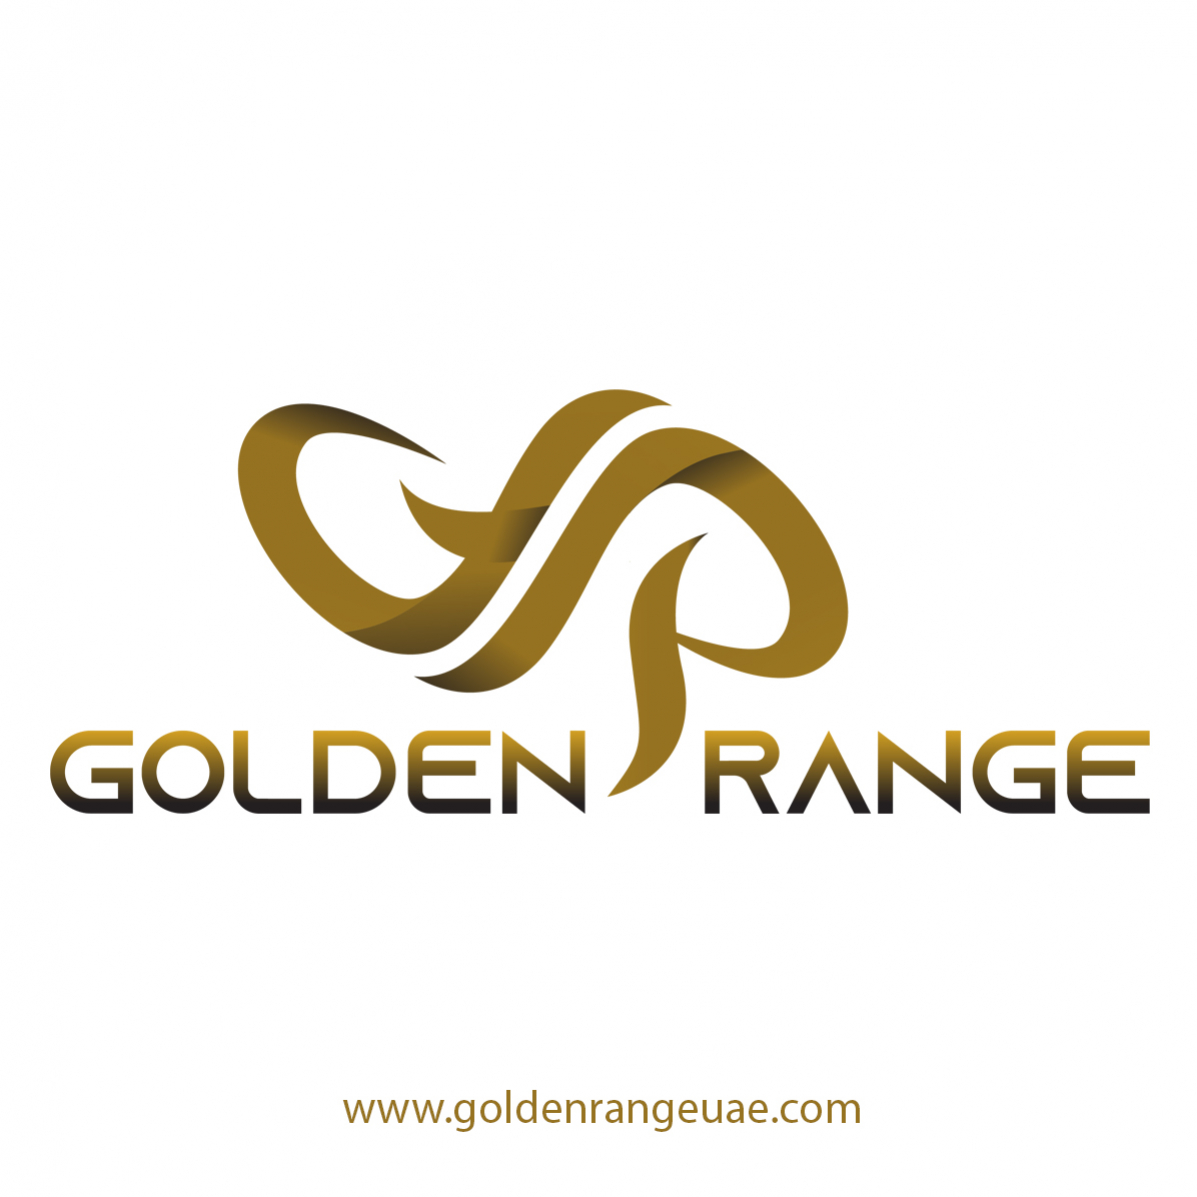 GoldenRangeae